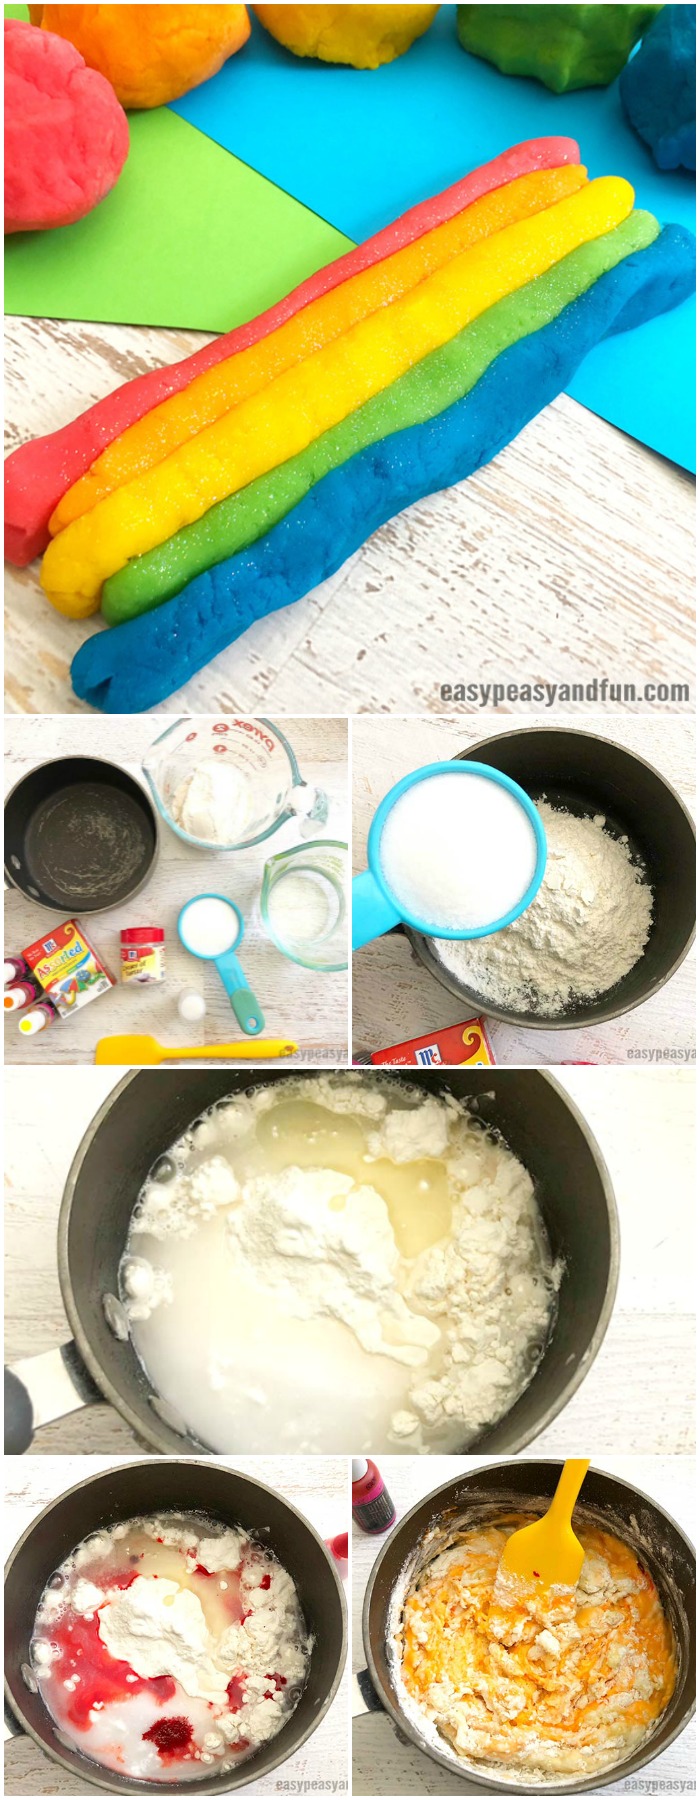 DIY Rainbow Playdough Recipe – Perfect Batch for St. Patrick’s or Spring